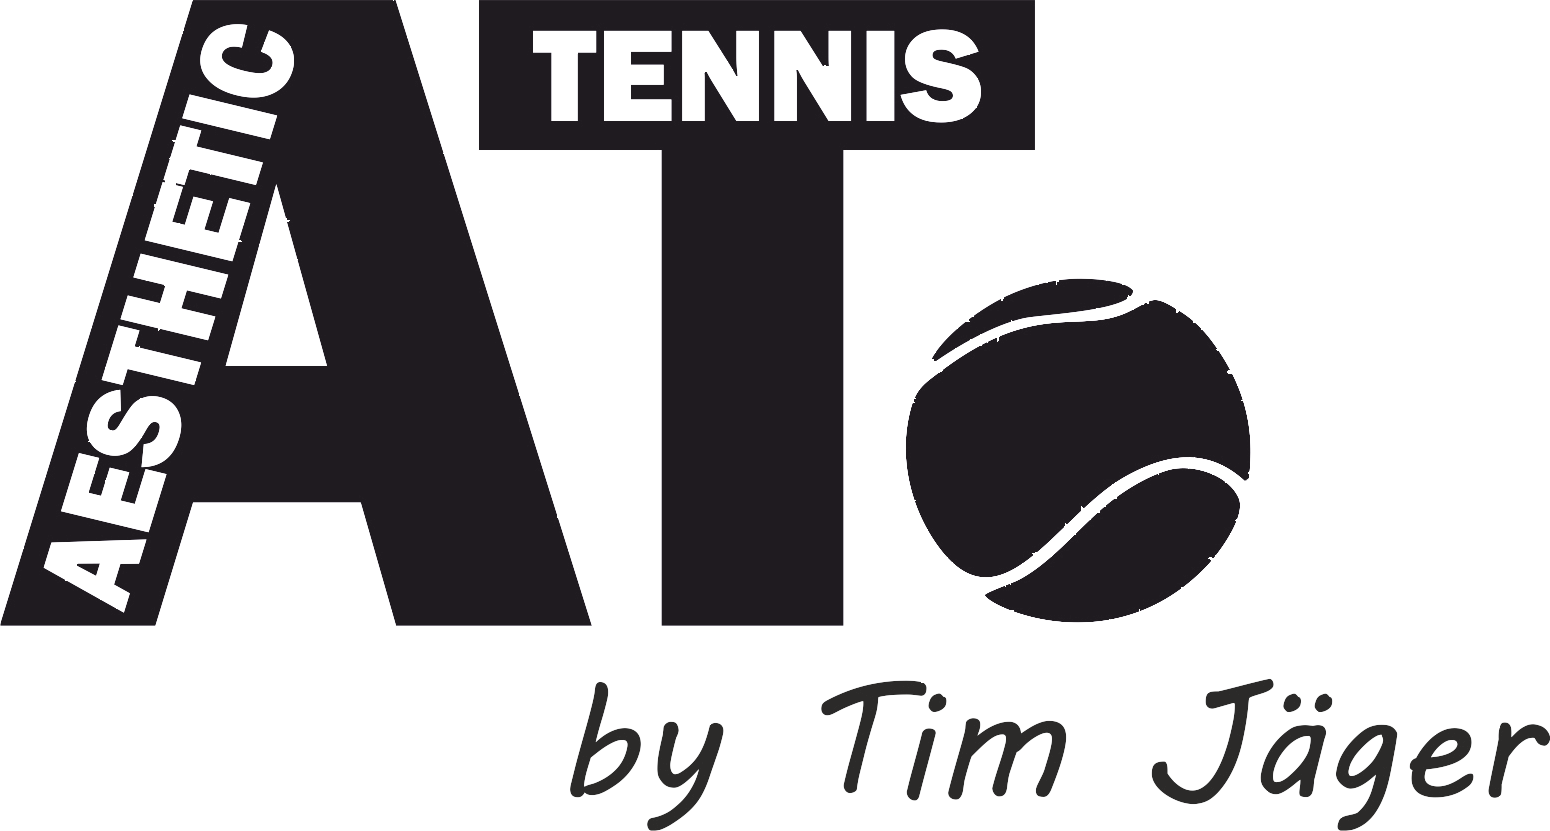 Aesthetic Tennis